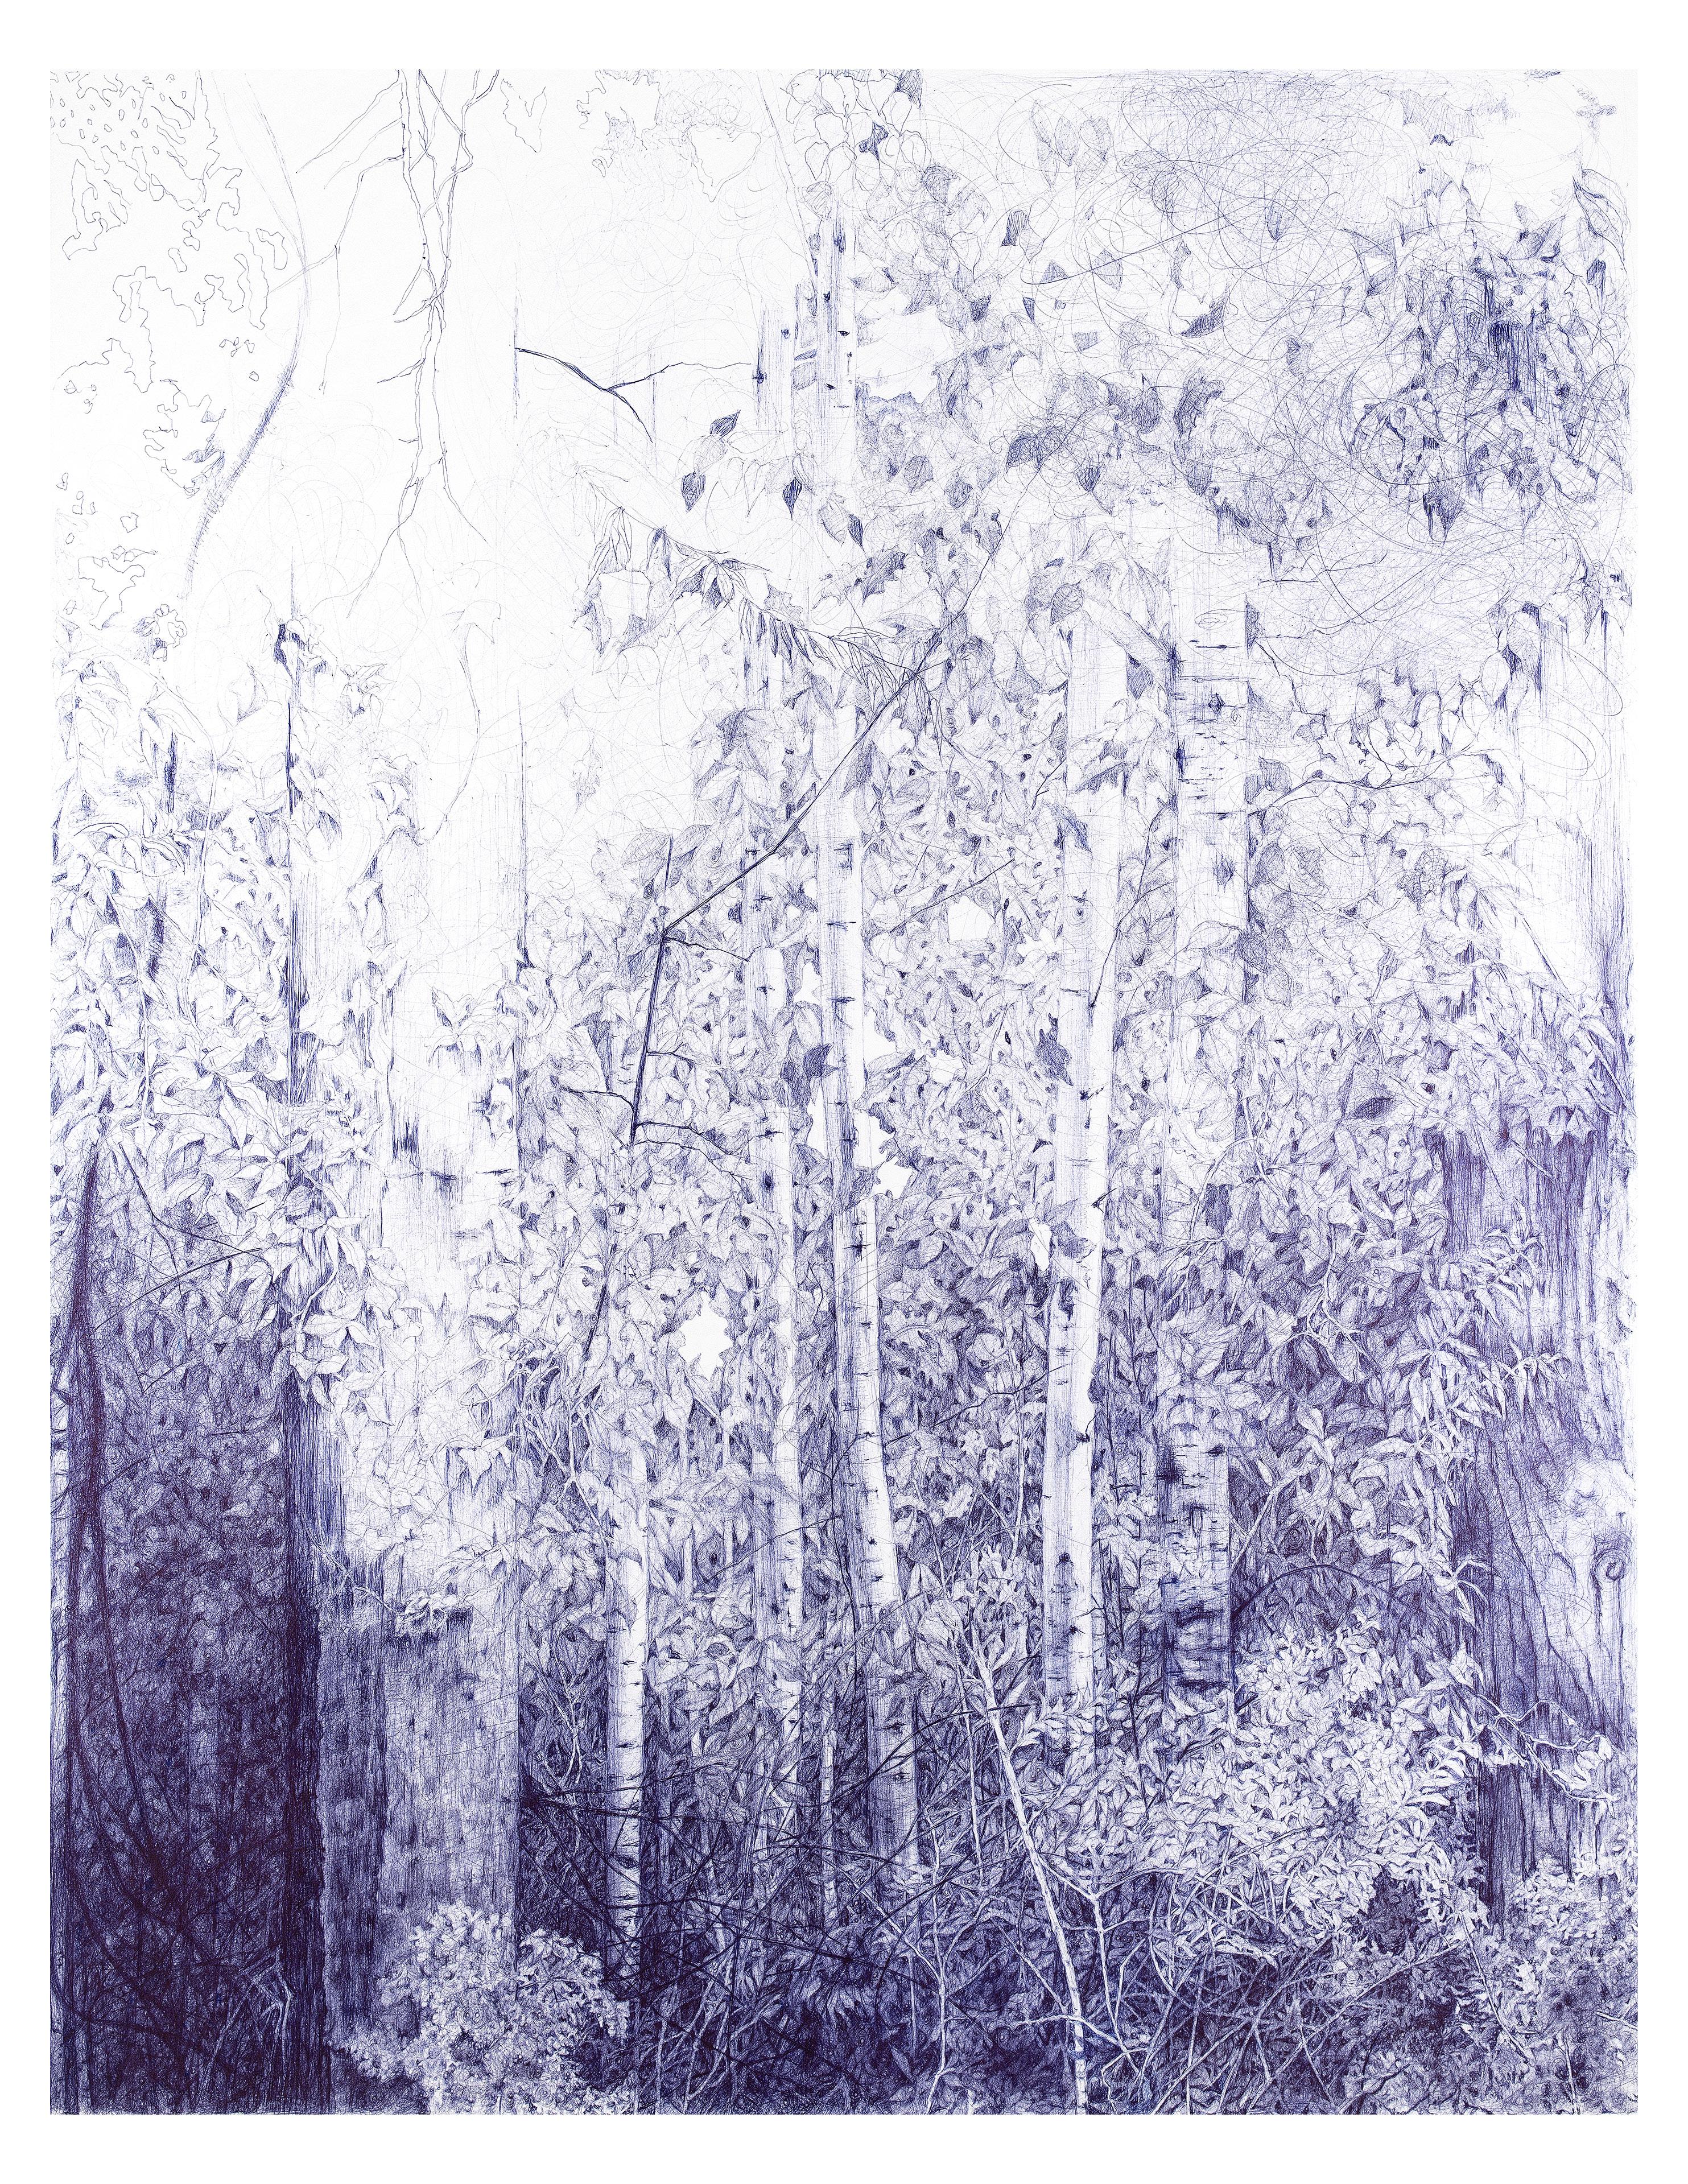 Yield and Overcome (Archivdruck eines blauen Ball Point Pen Forest Landscape)